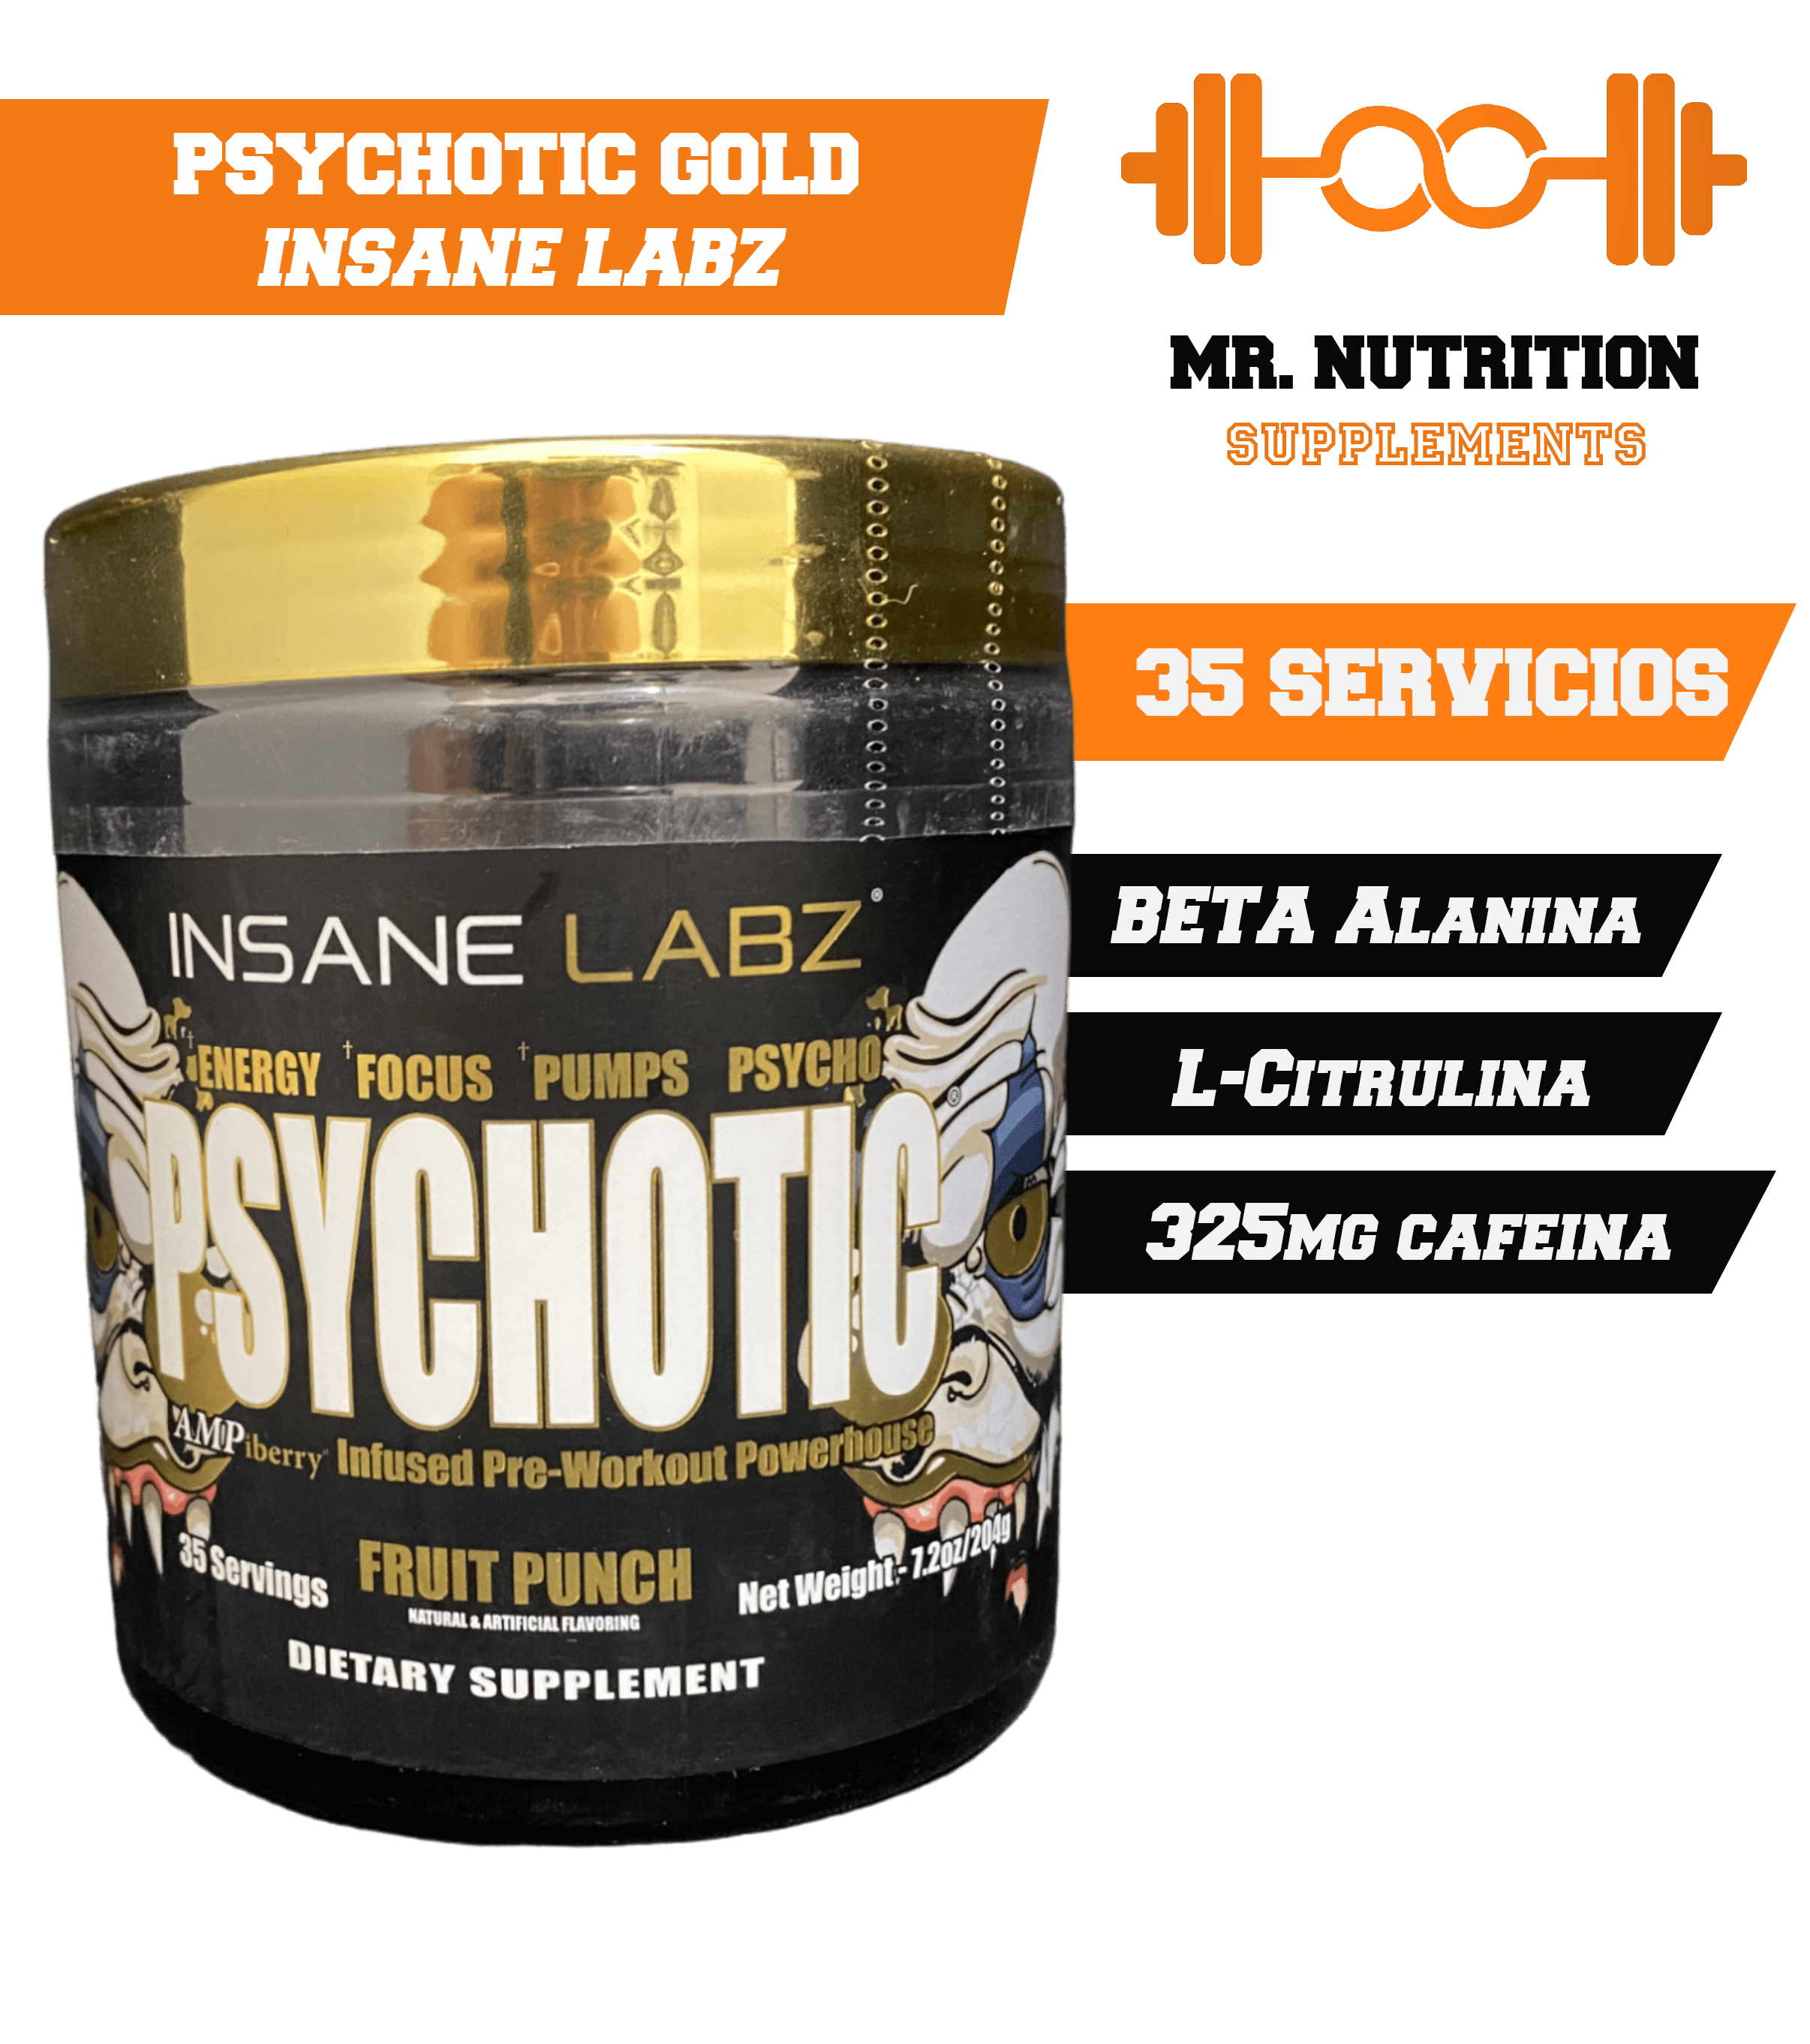 Psychotic Gold fruit punch